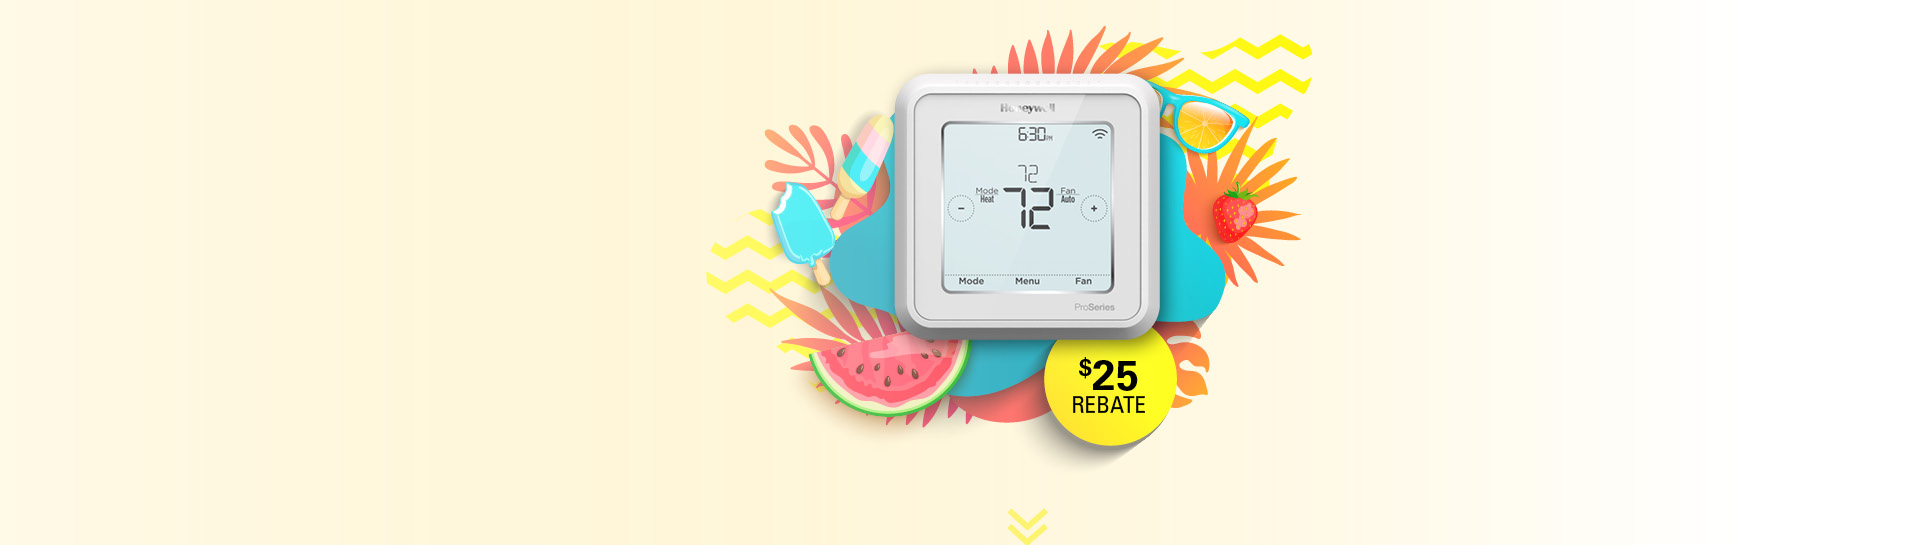 $25 Wi-Fi thermostat rebate